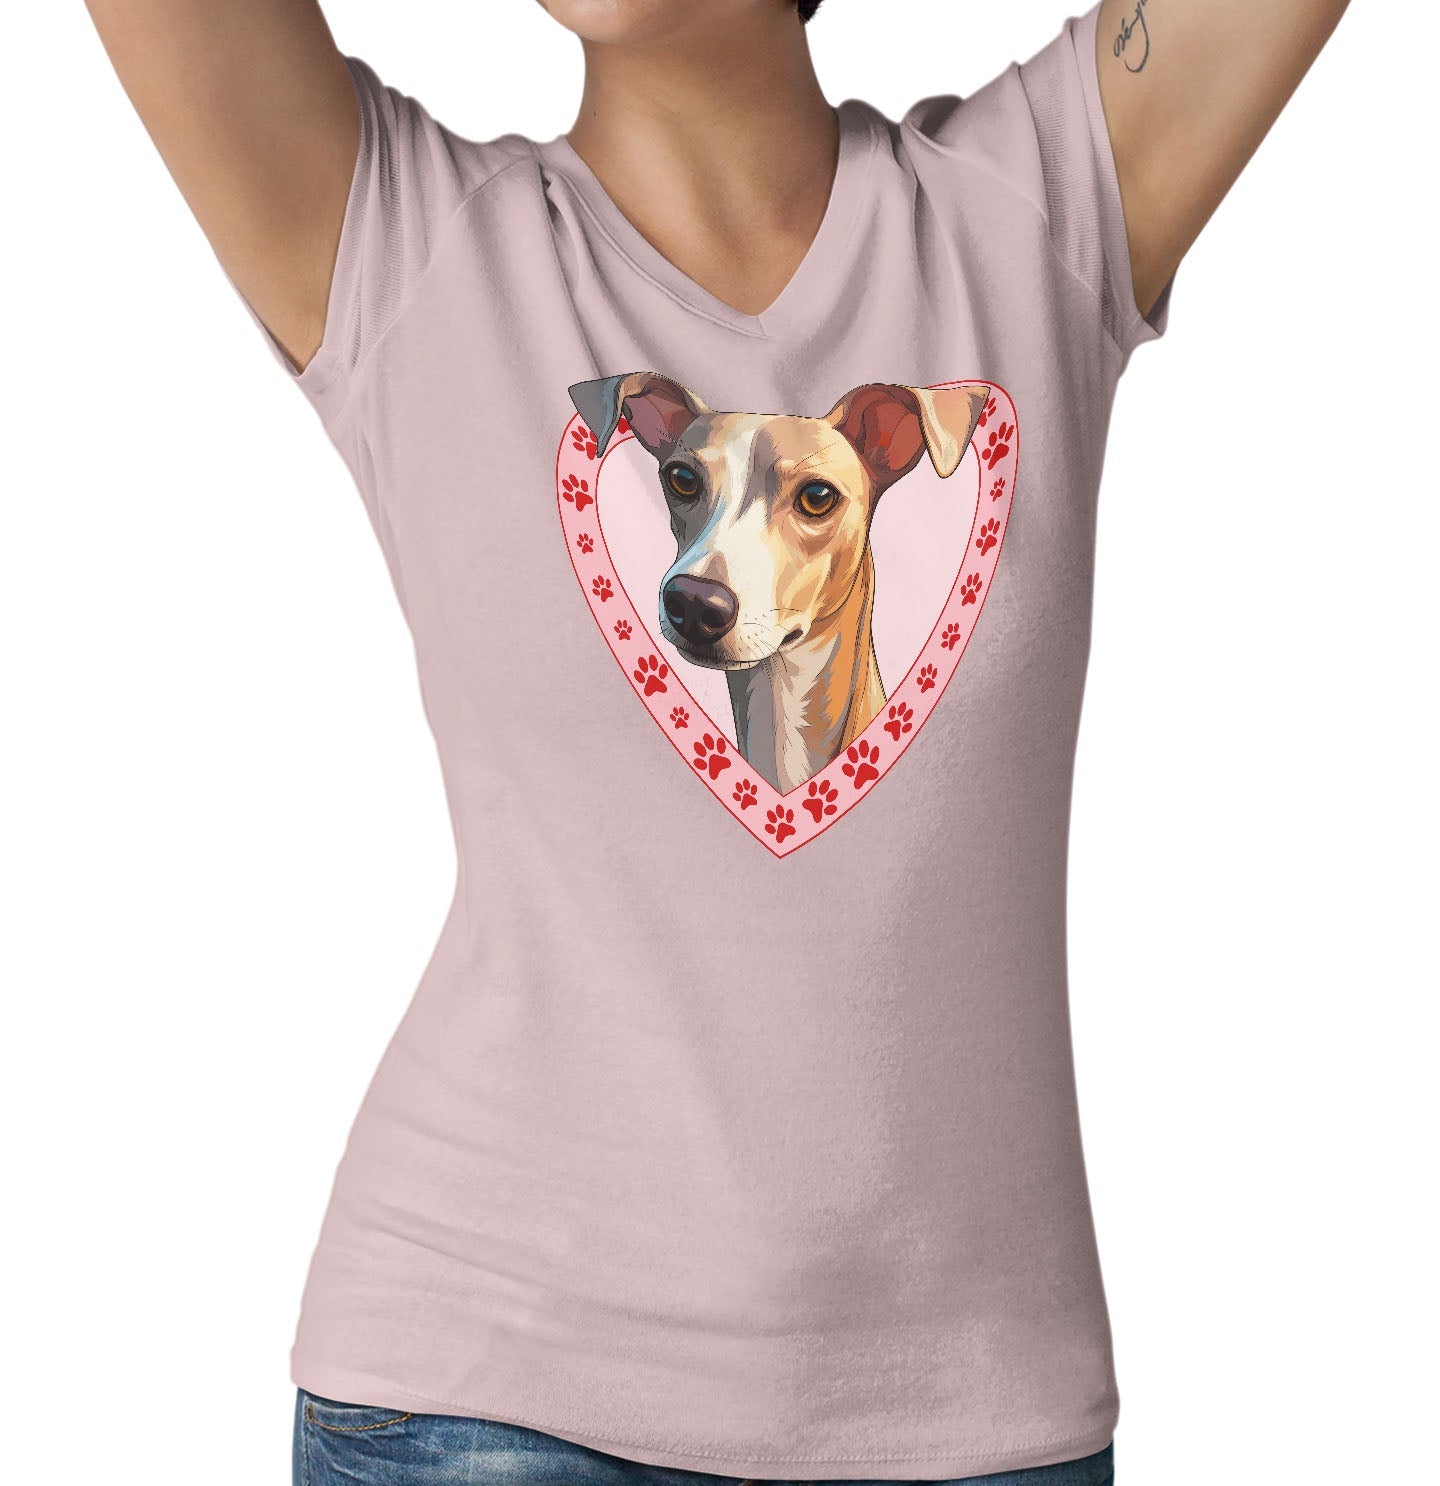 Italian Greyhound (White & Fawn) Illustration In Heart - Women's V-Neck T-Shirt